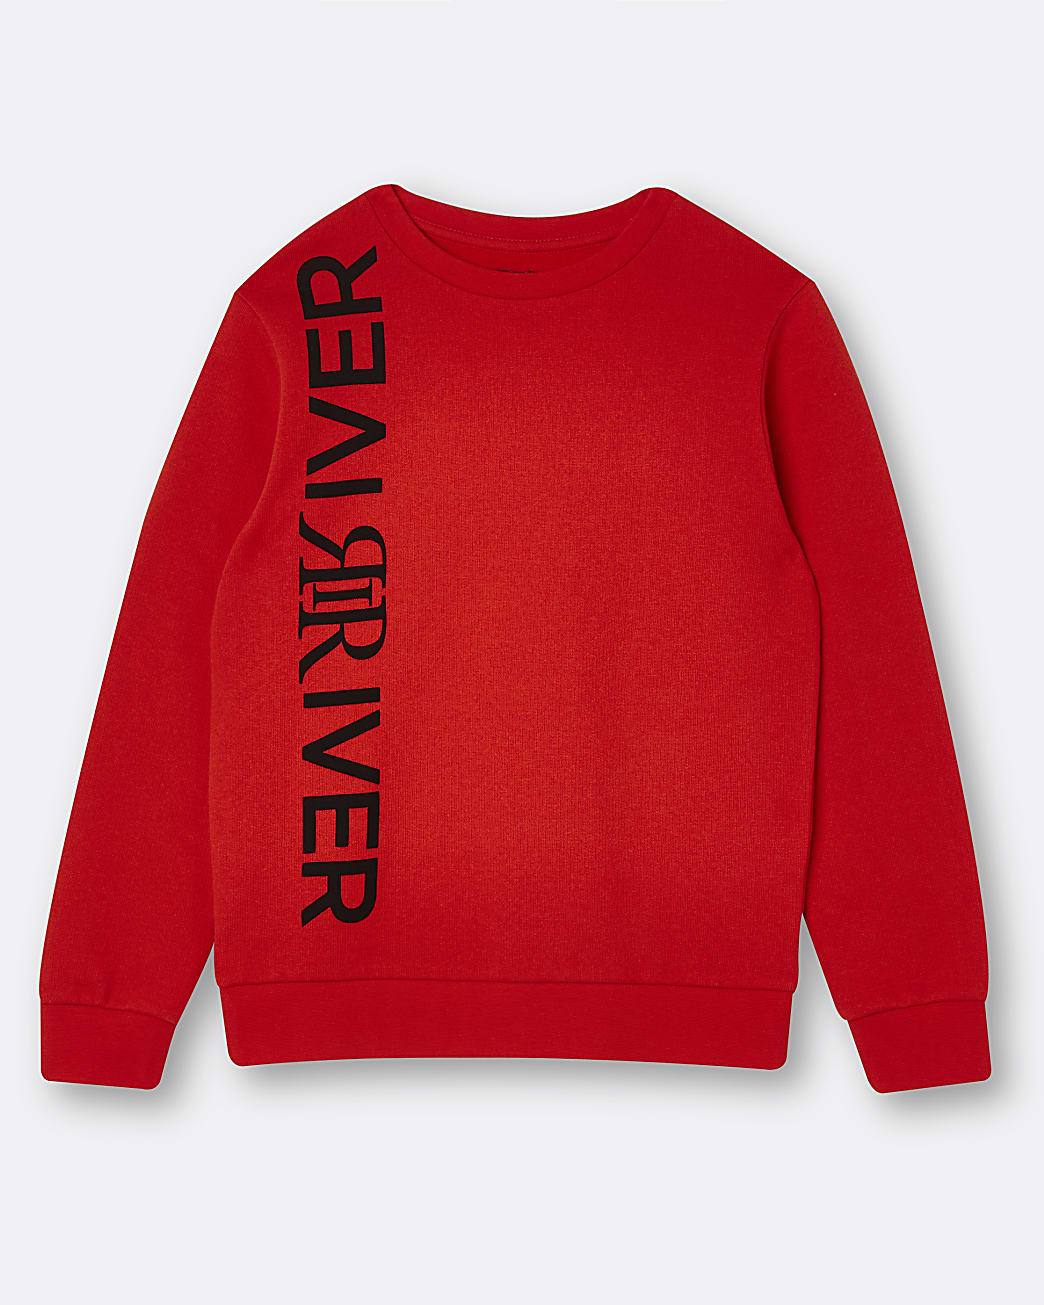 Boys red River sweatshirt